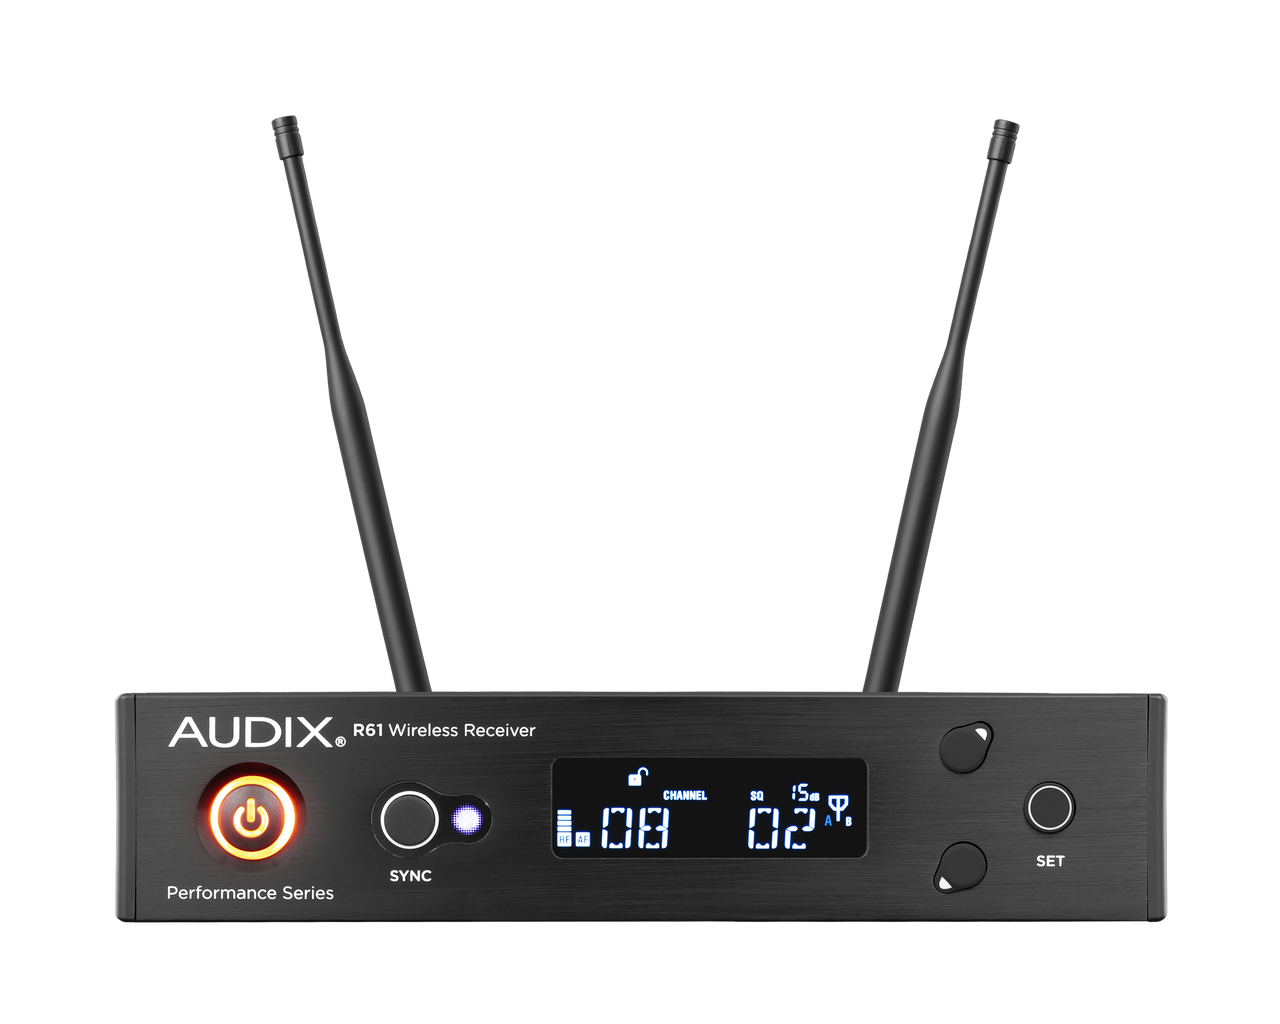 Audix AP61VX5 Wireless Microphone System – R61 True Diversity Receiver With H60/Vx5 Handheld Transmitter